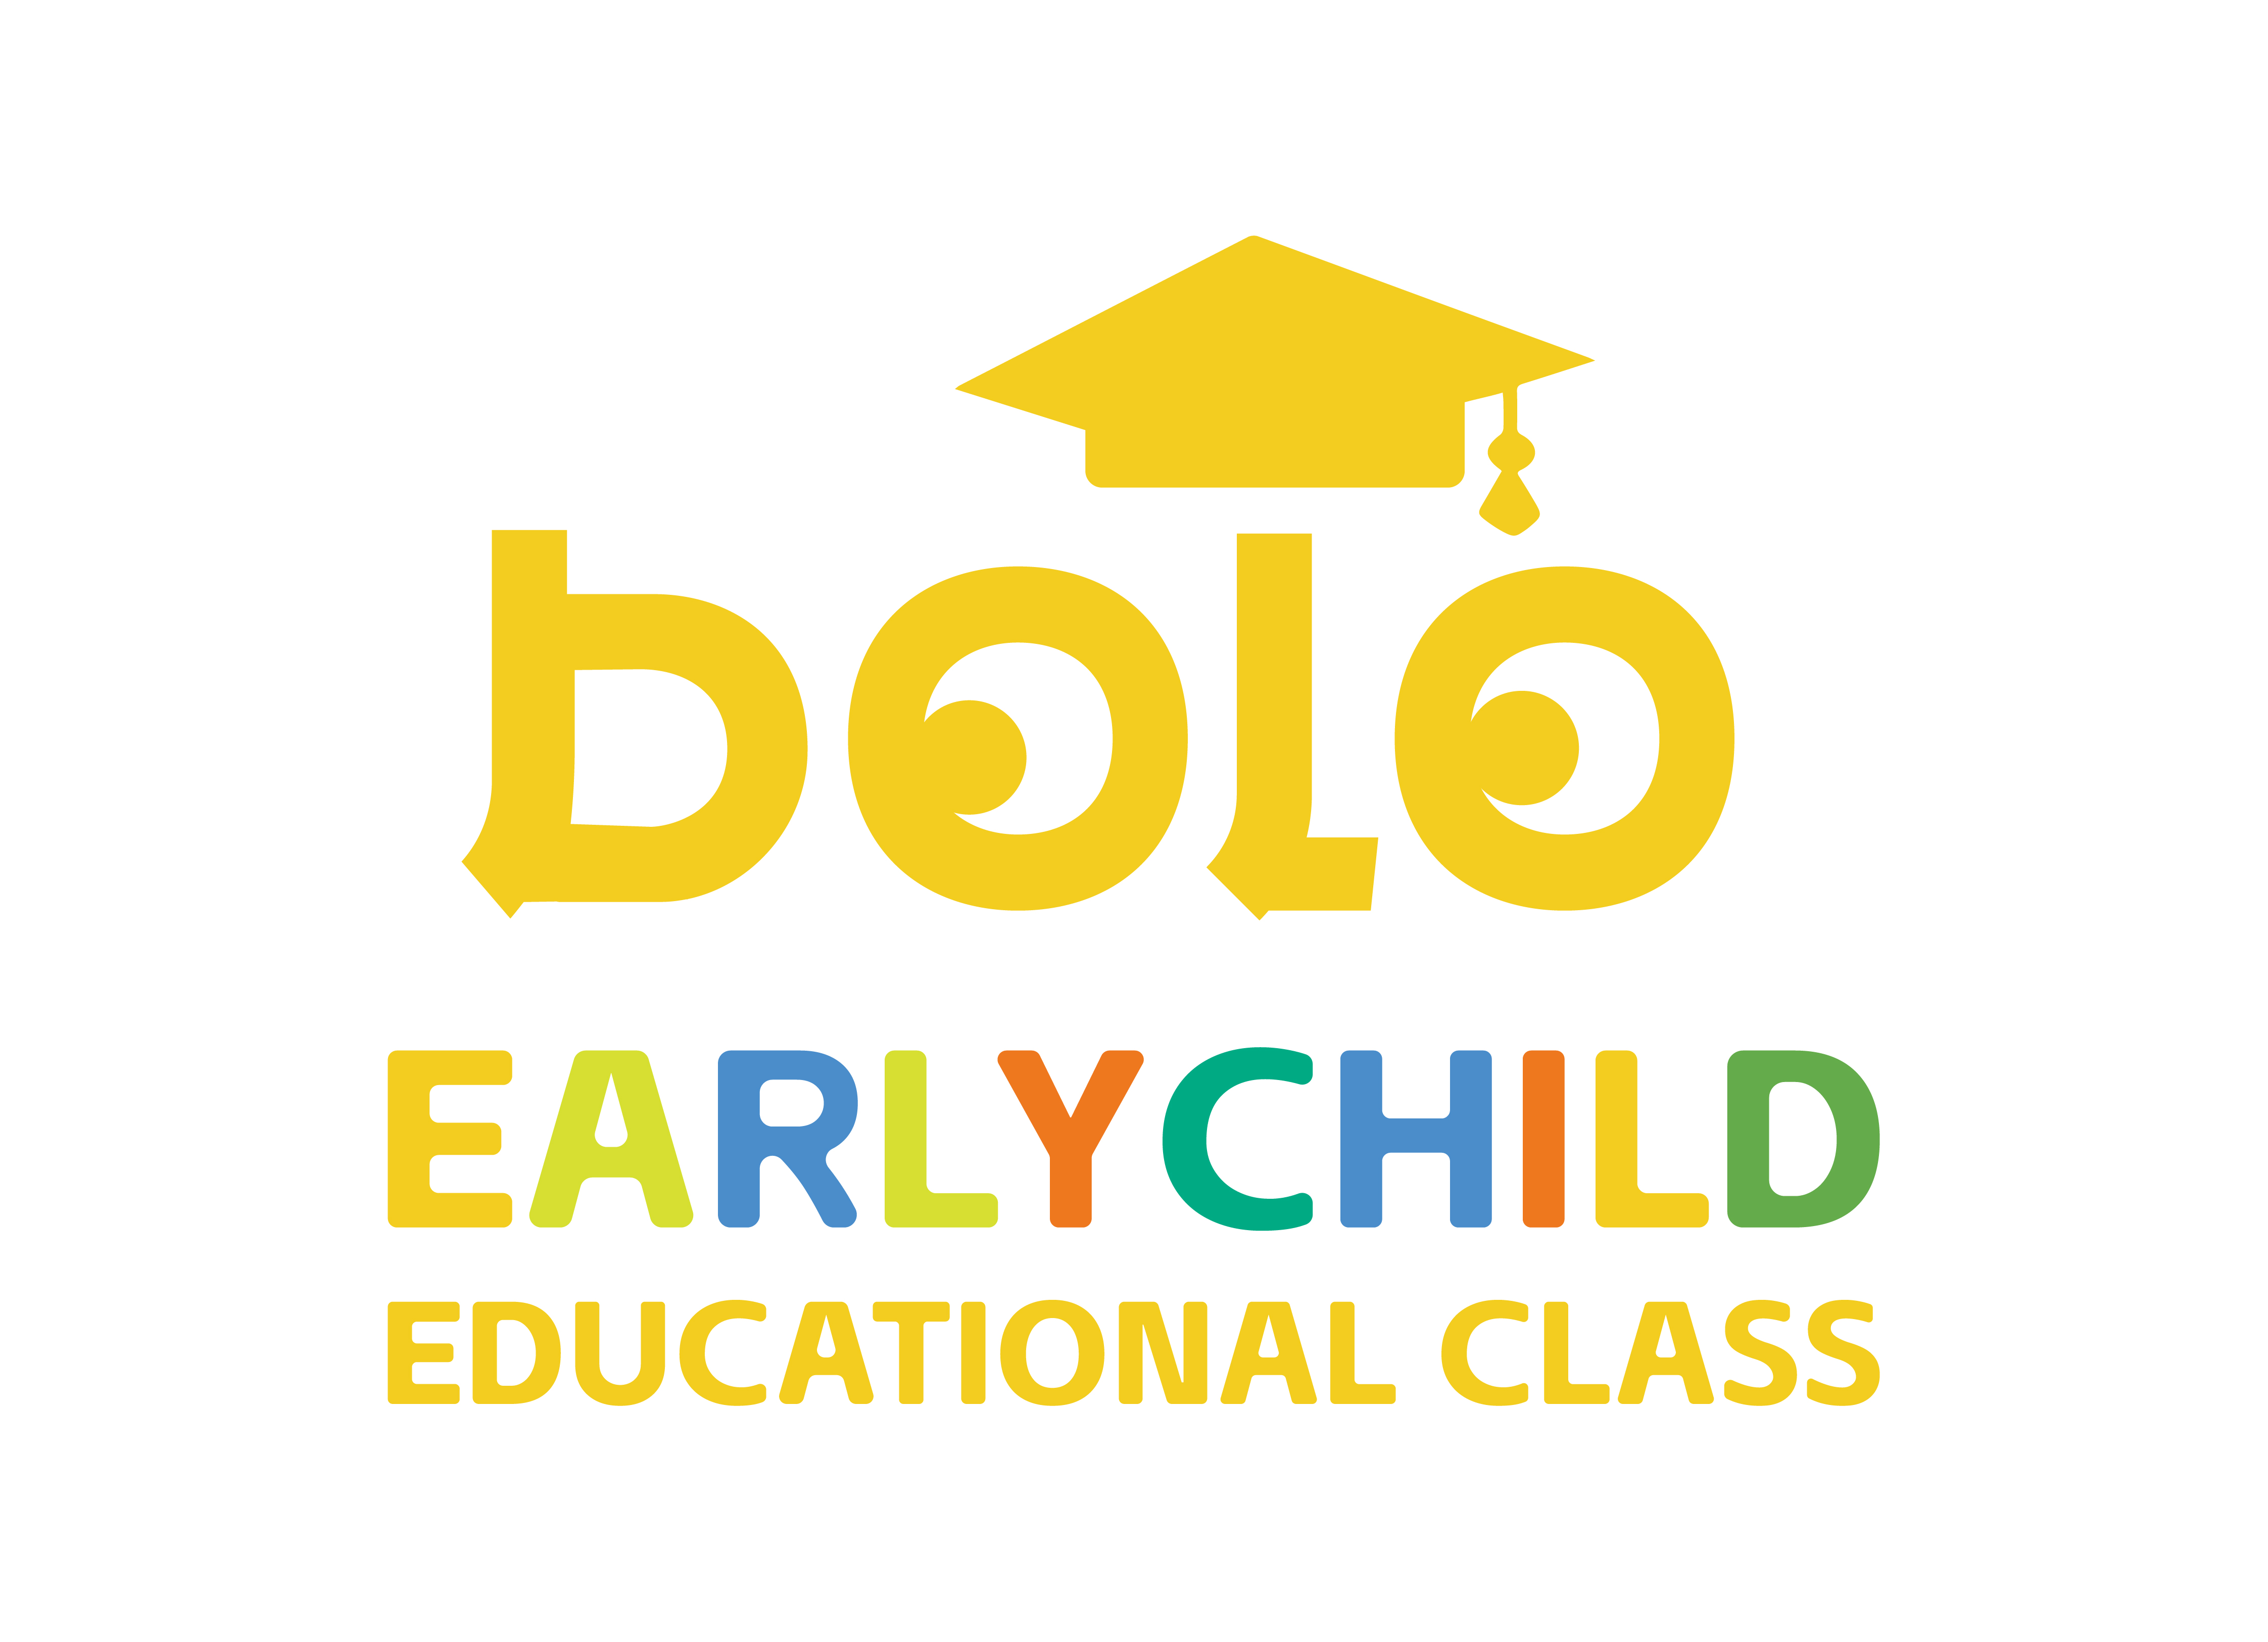 BOLO Earlychild Educational Class